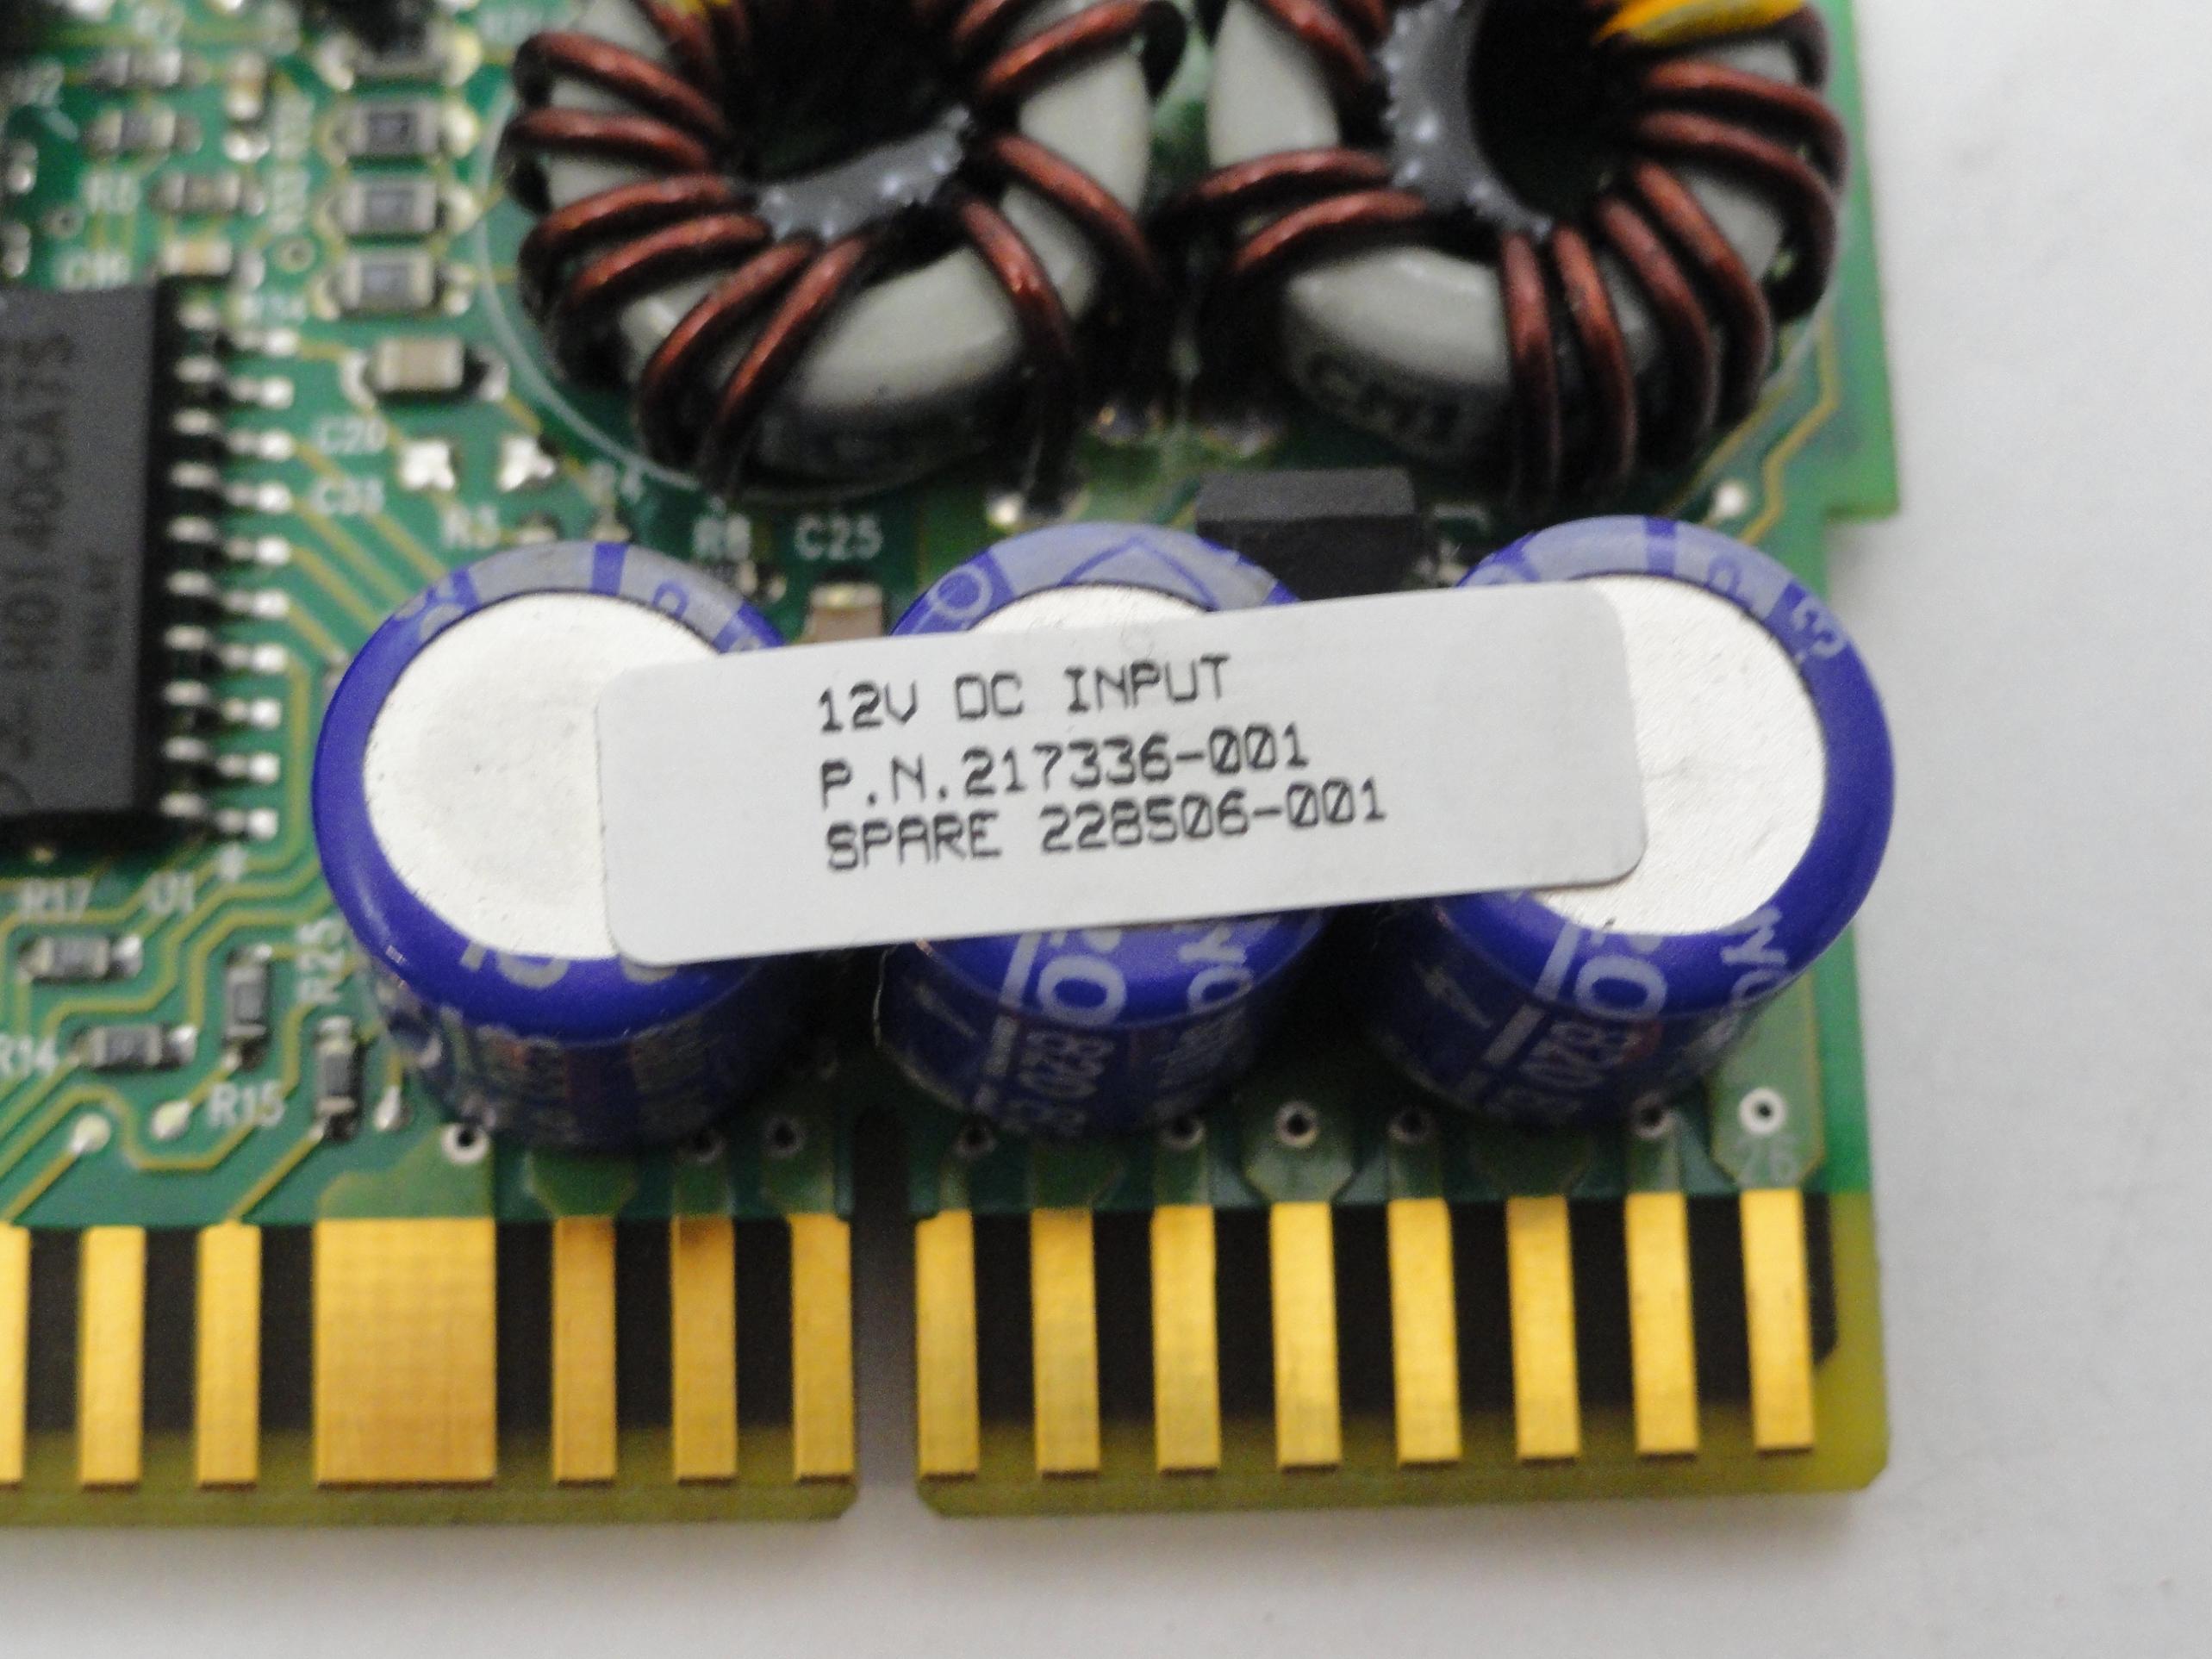 228506-001 - VRM for PGA370 Pentium 3 CPU from HP/Compaq ProLiant ML330 G2 Server - Refurbished